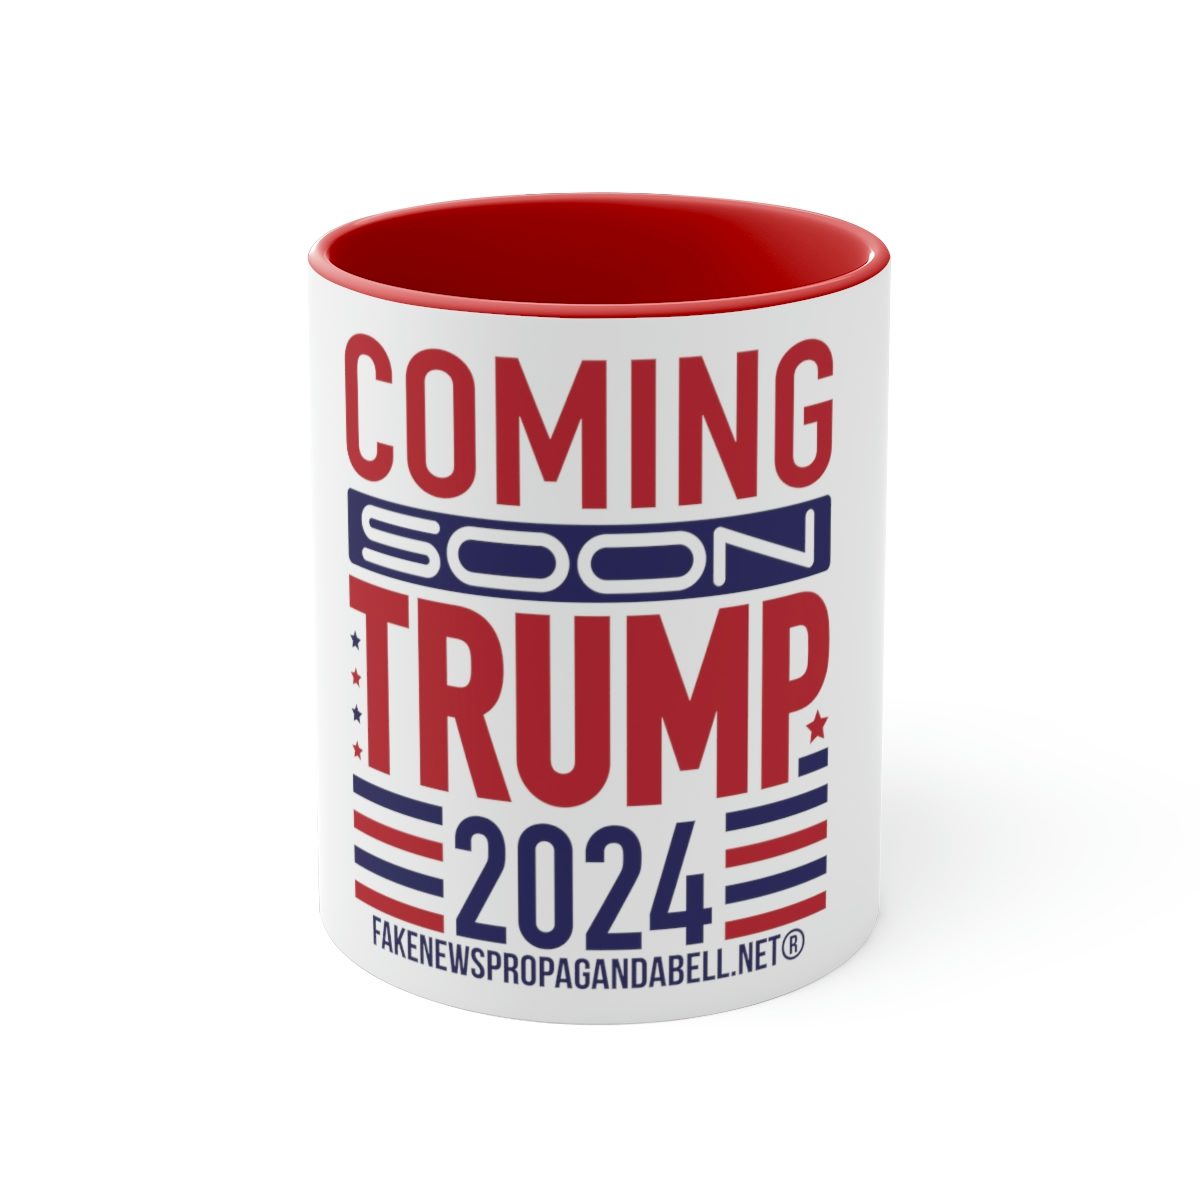 Accent Coffee Mug, 11oz  COMING SOON TRUMP 2024